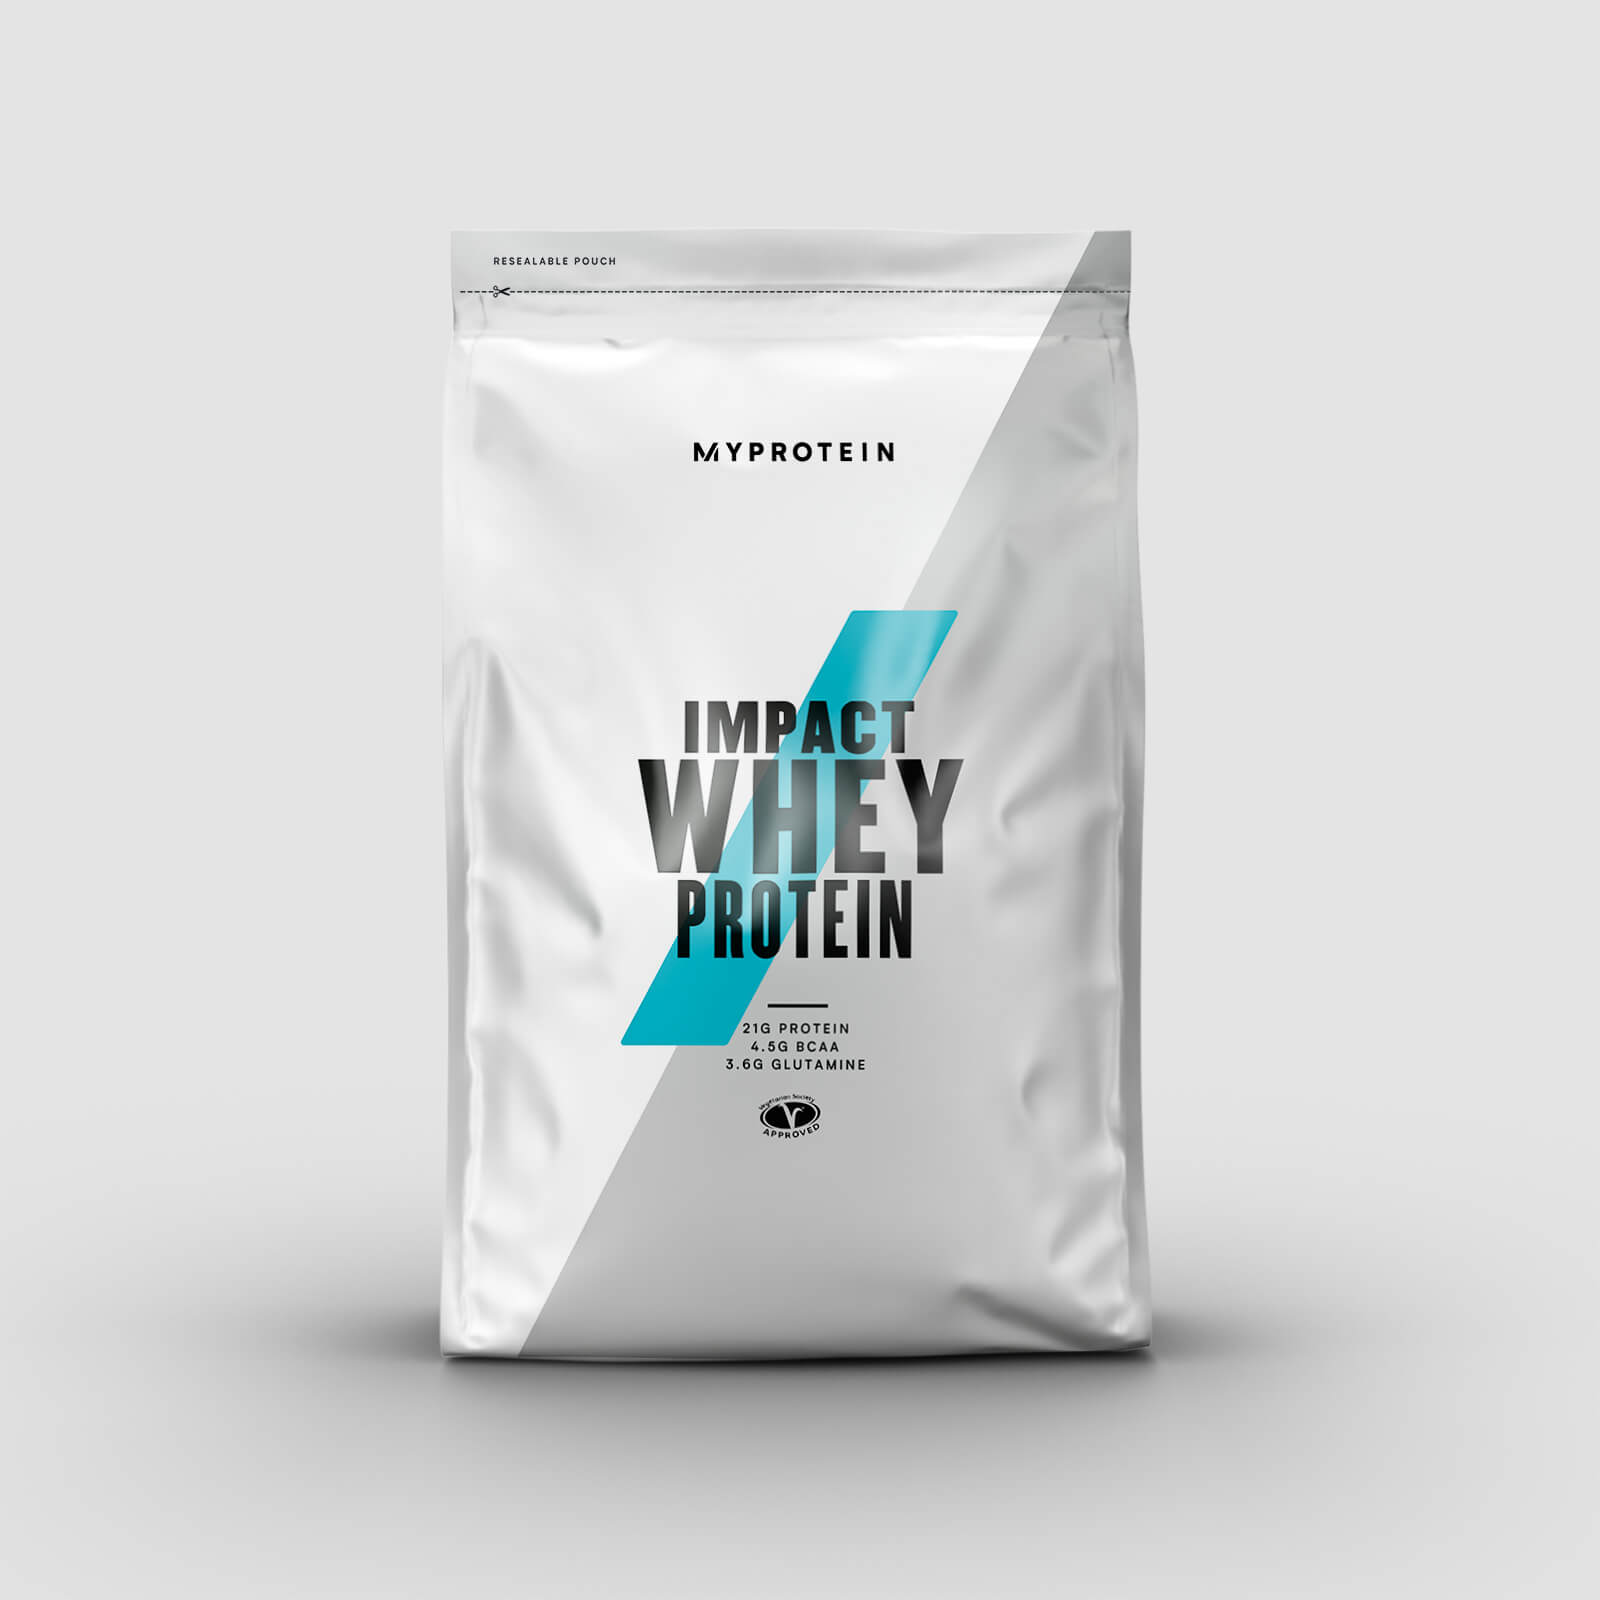 Myprotein Vassleprotein - Impact Whey Protein - 1kg - Sticky Toffee Pudding